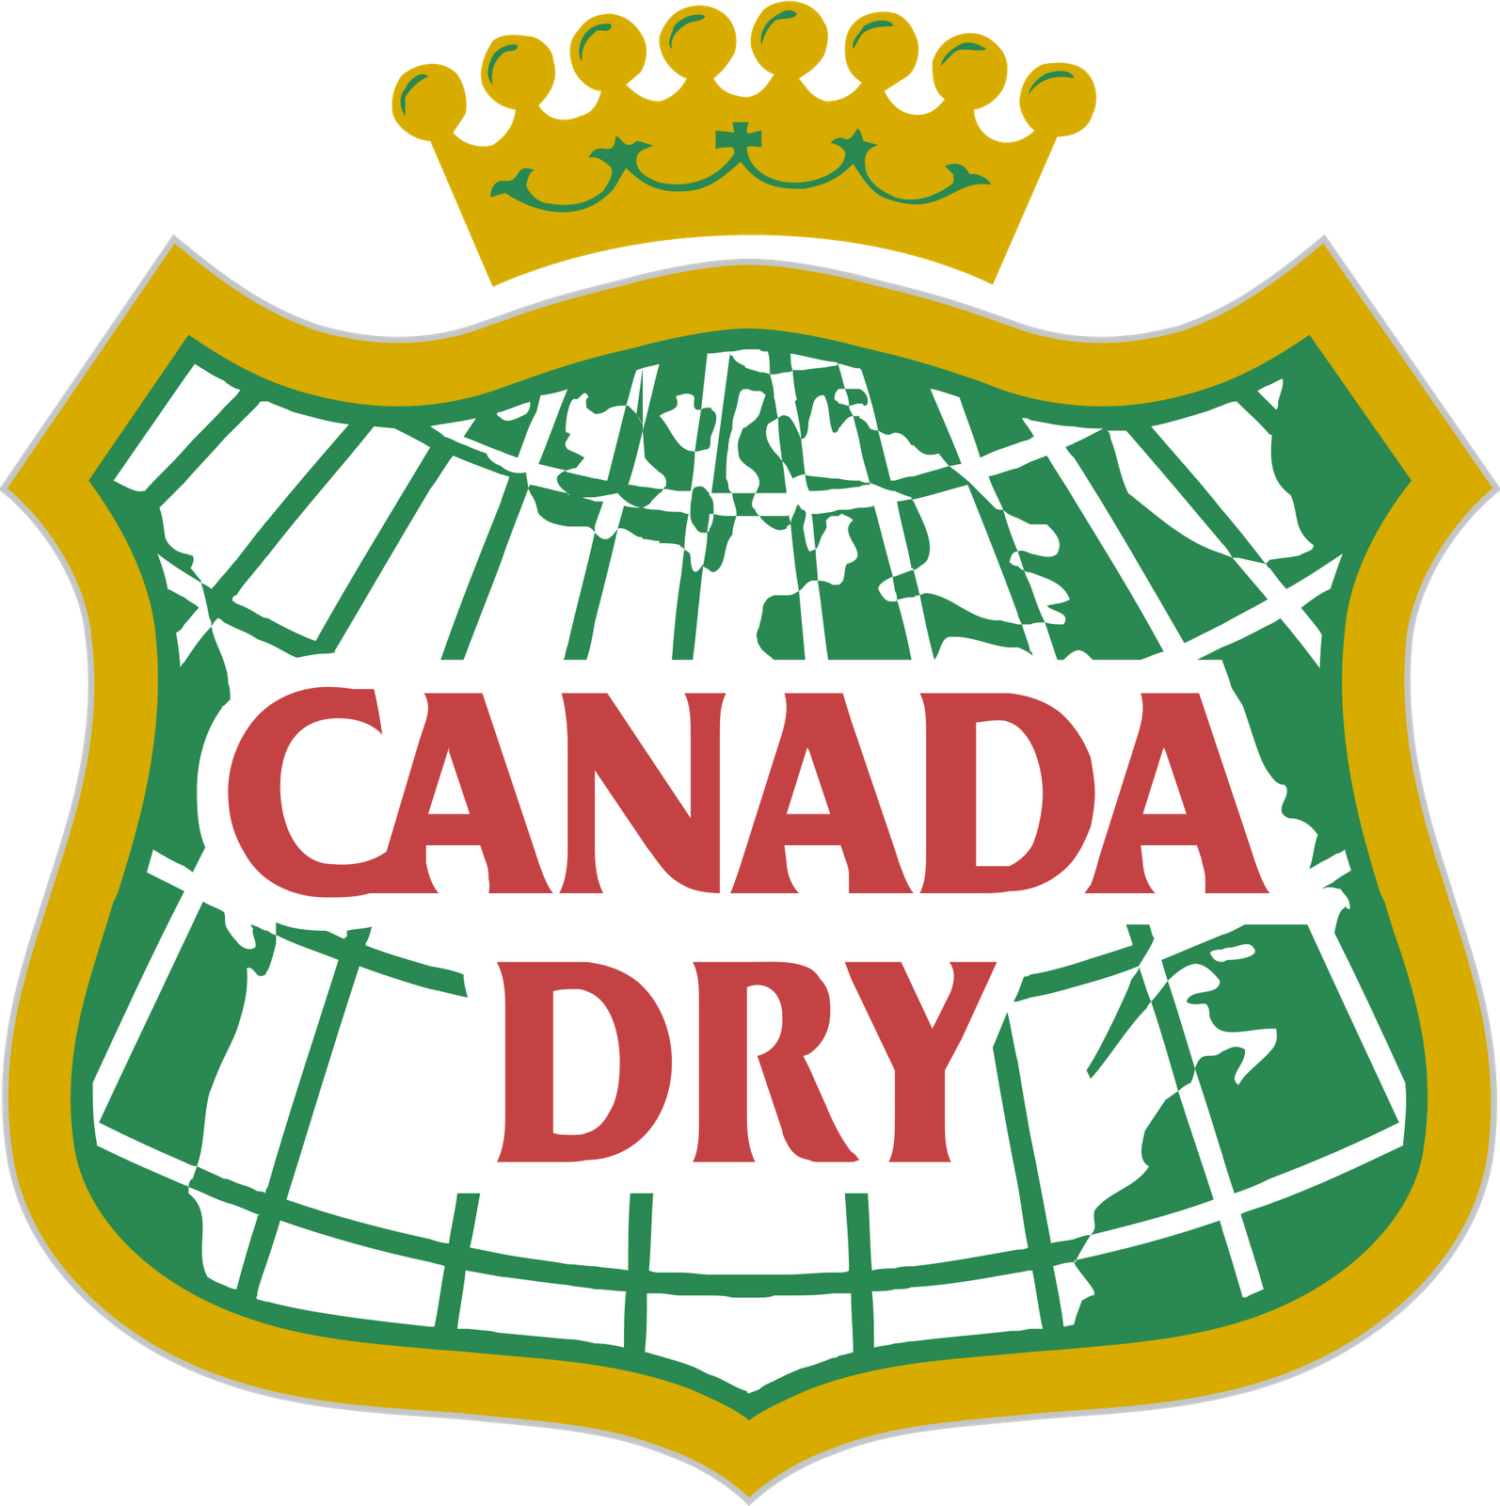 Canada Dry Nutrition Info & Calories Aug 2020 | SecretMenus